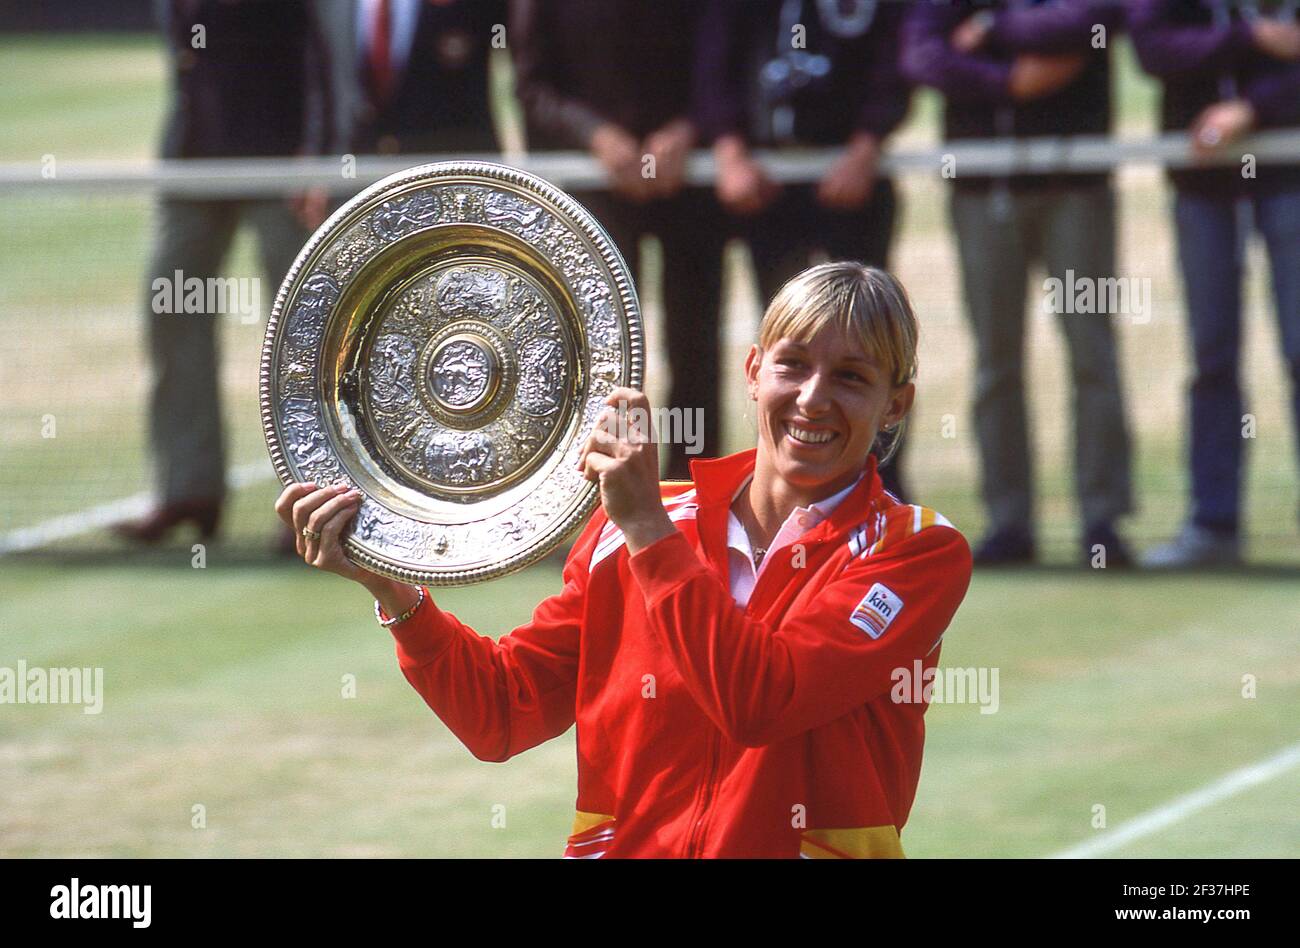 Czech tennis player Martina Navratilova holding Wimbledon Champioships trophy (1982), Wimbledon, Borough of Merton, Greater London, England, United Ki Stock Photo